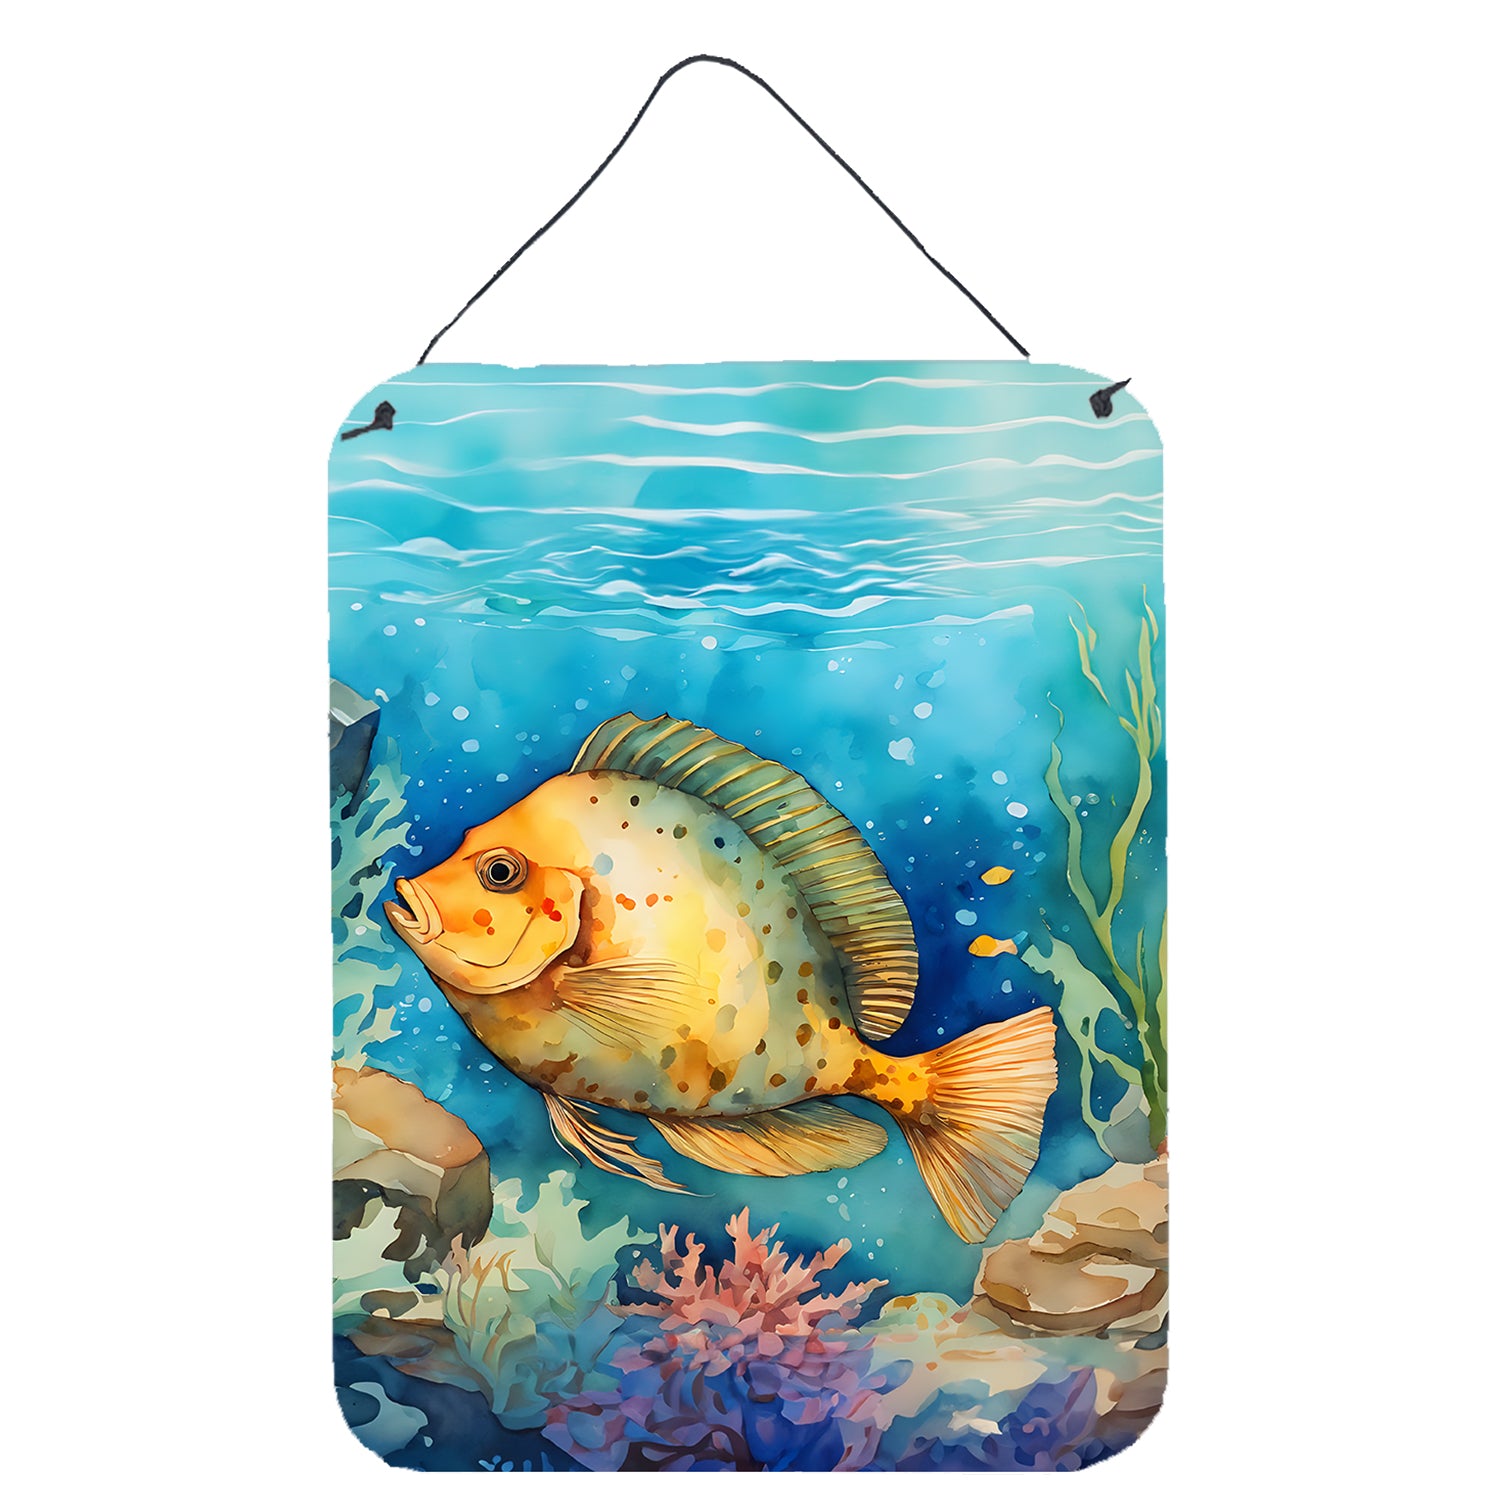 Buy this Flounder Wall or Door Hanging Prints